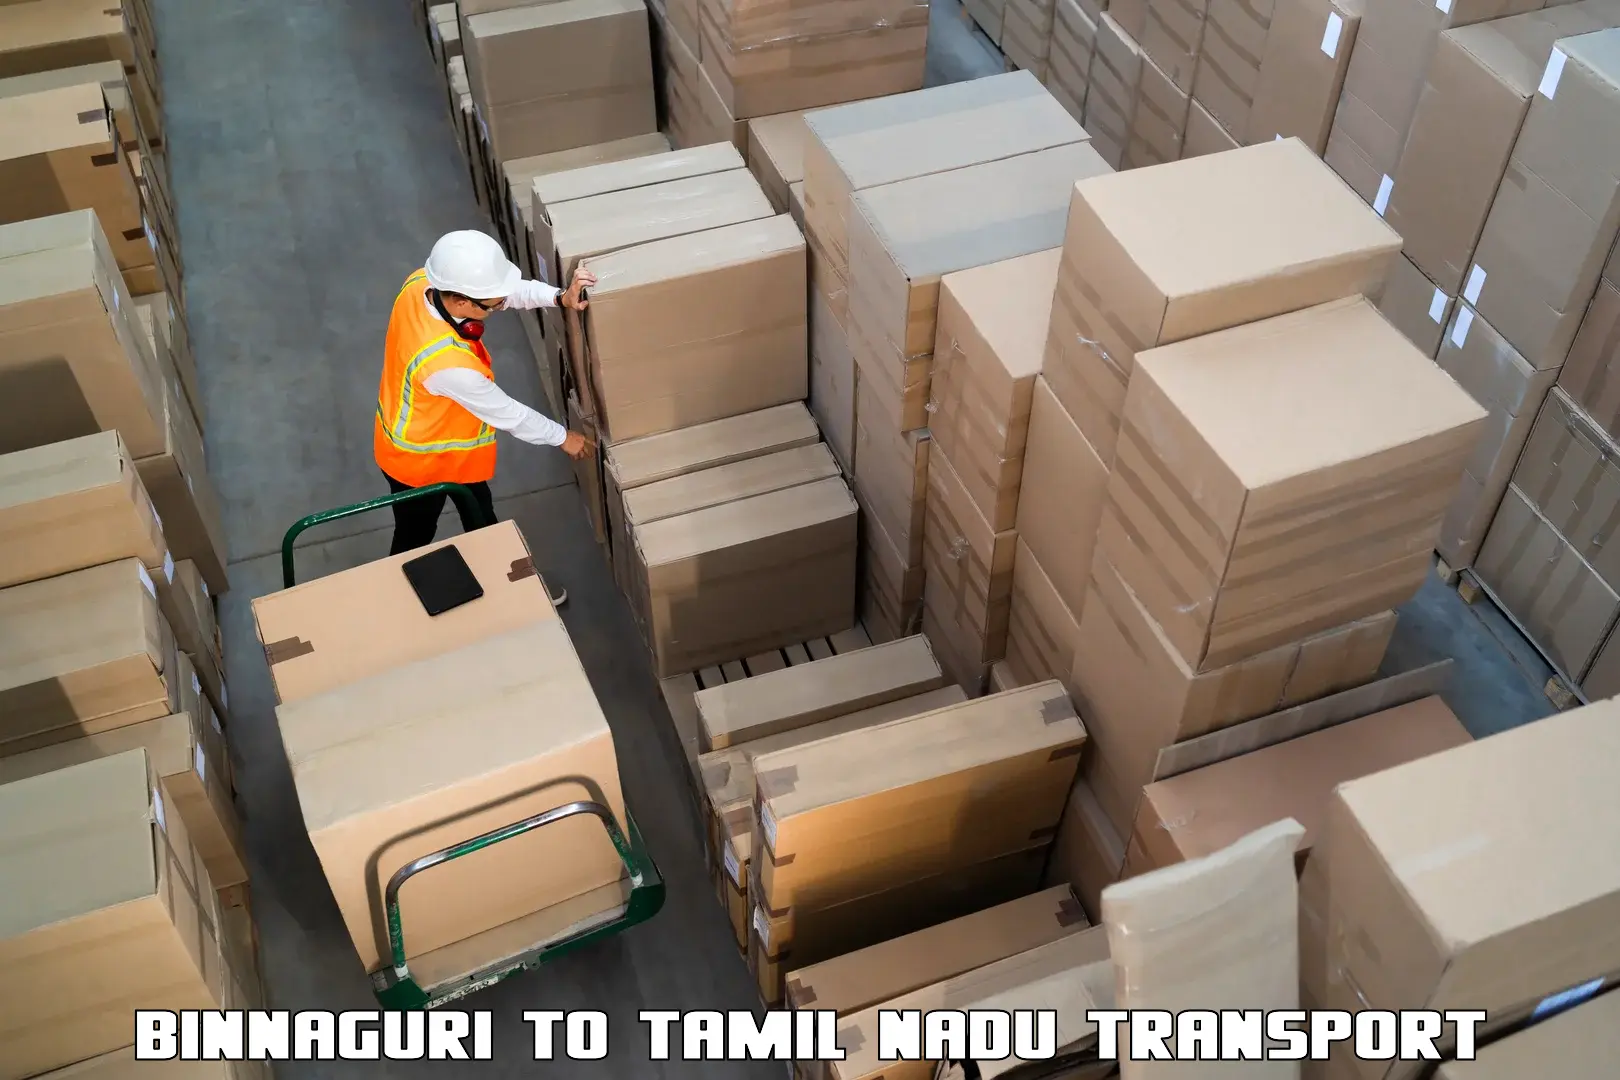 Vehicle transport services in Binnaguri to Tallakulam